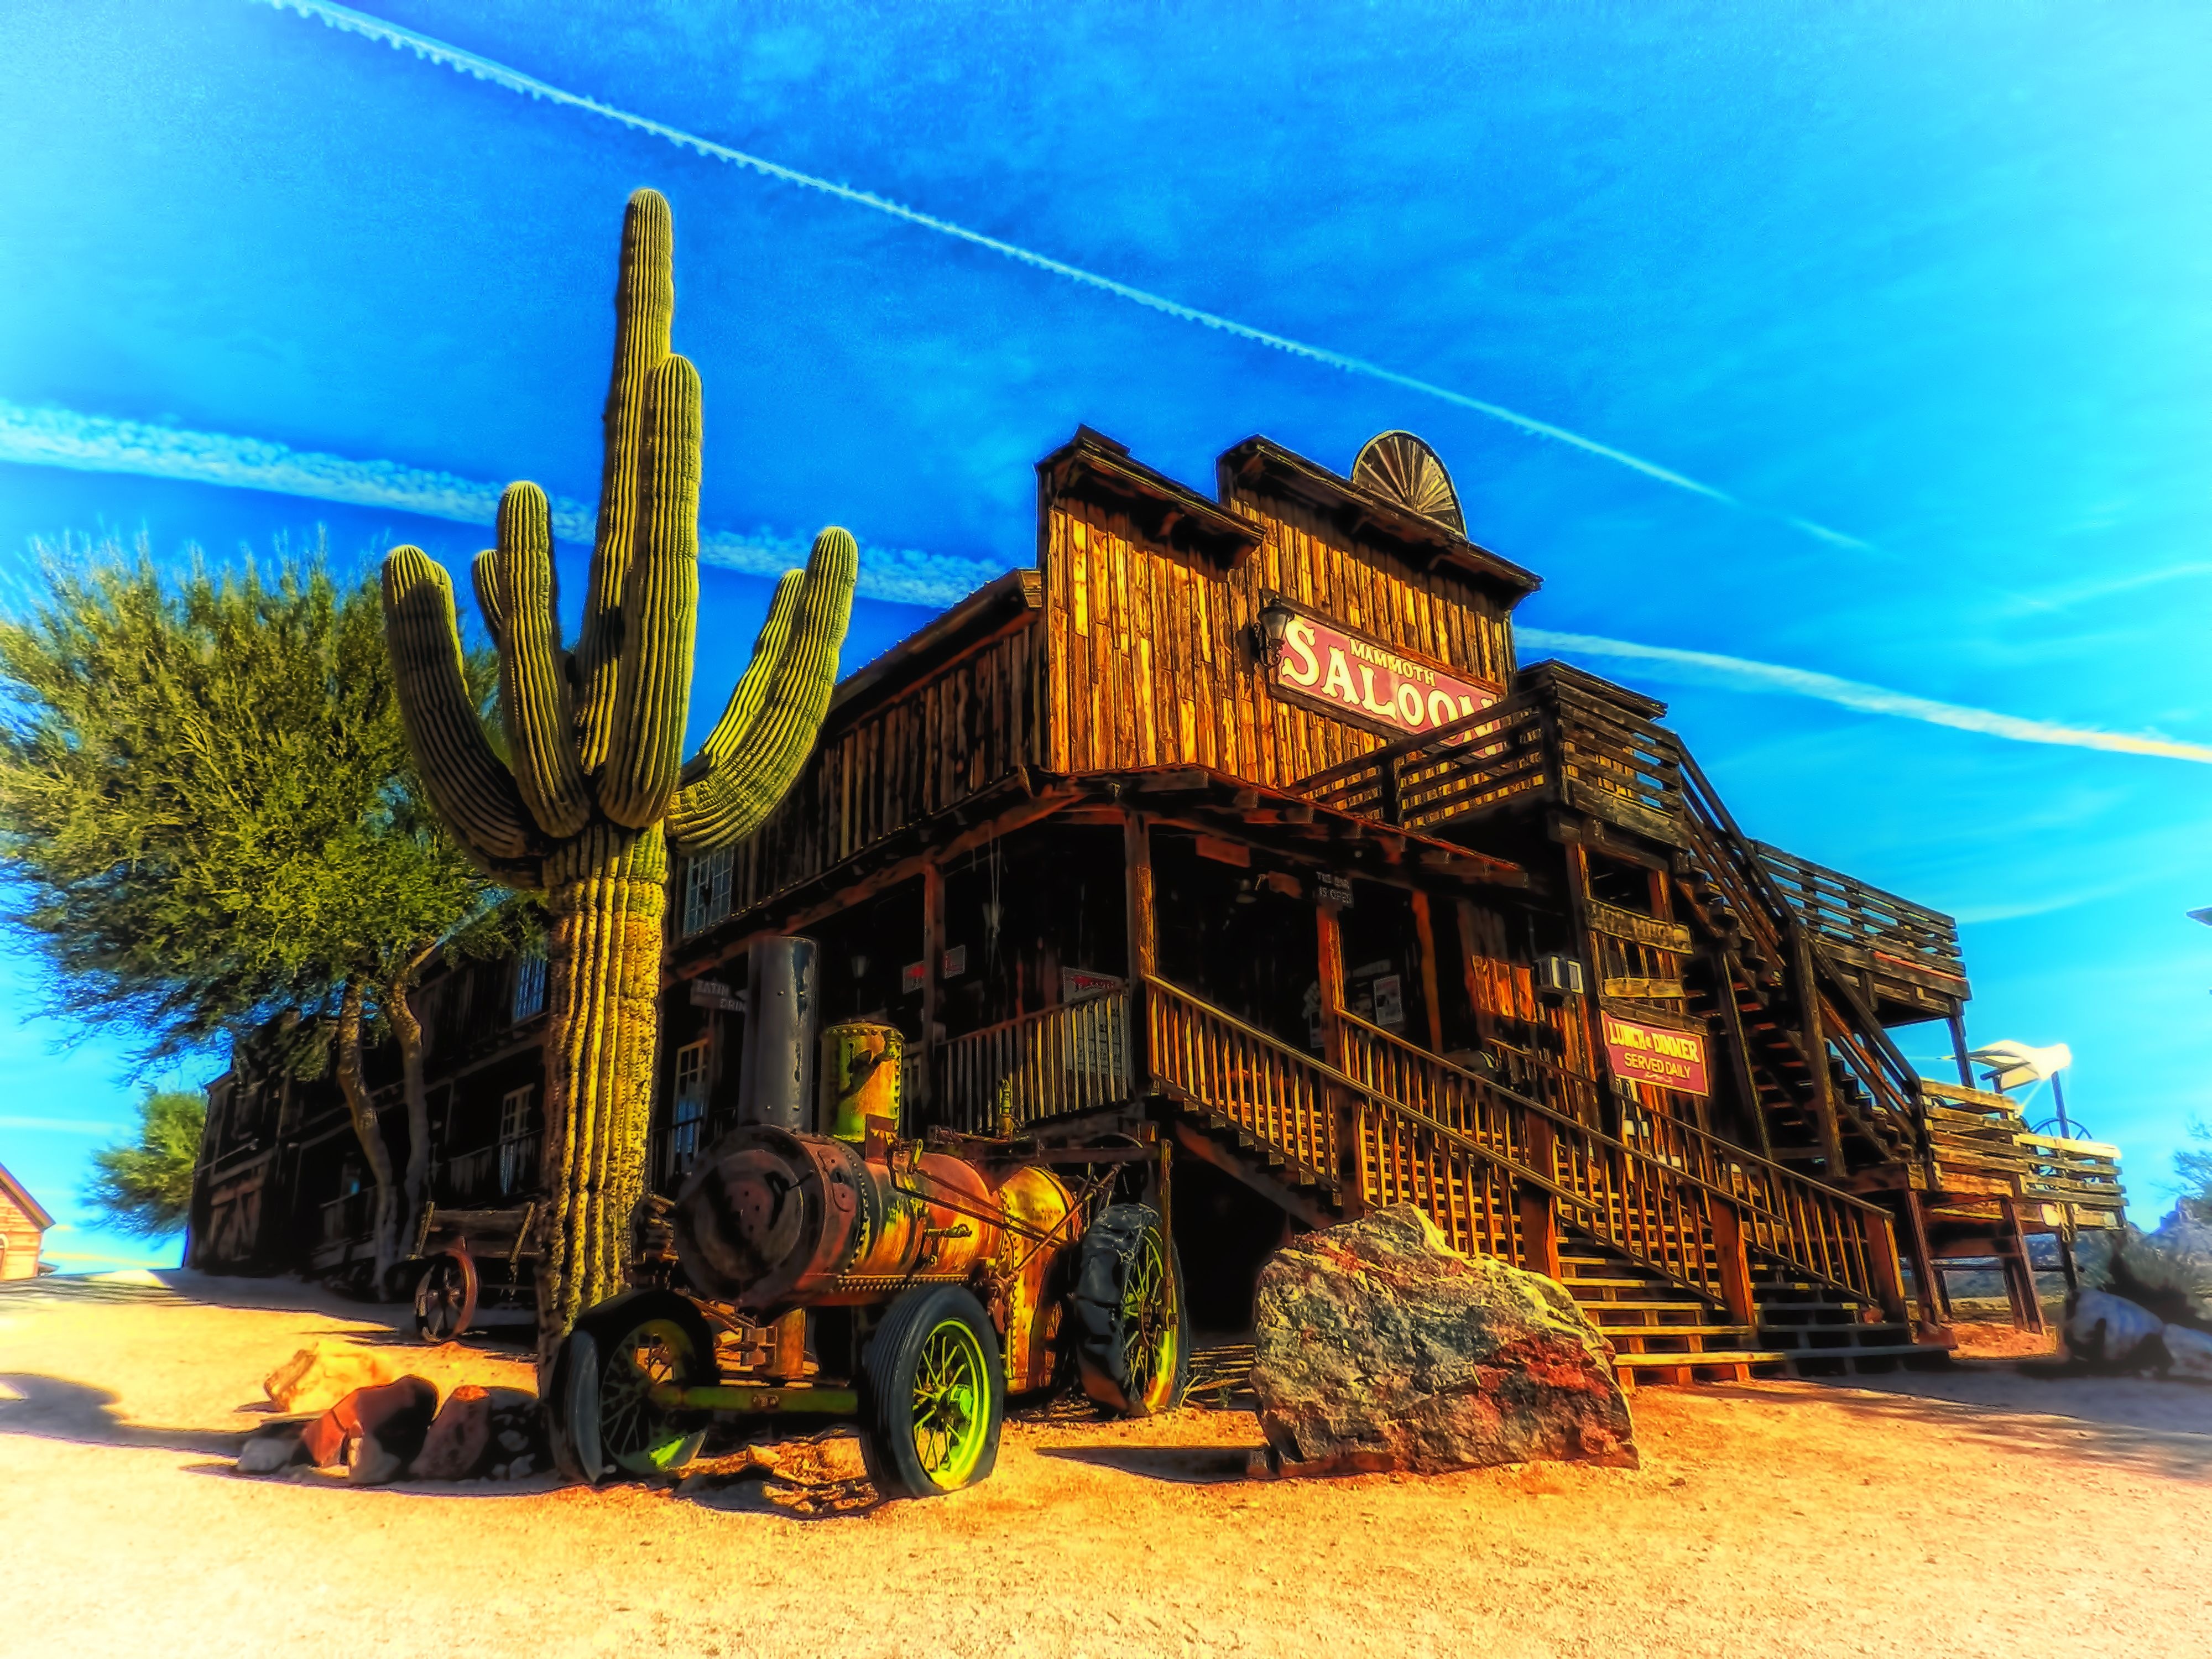 Arizona saloon cactus landscape western hdr f wallpaper background 4000x3000